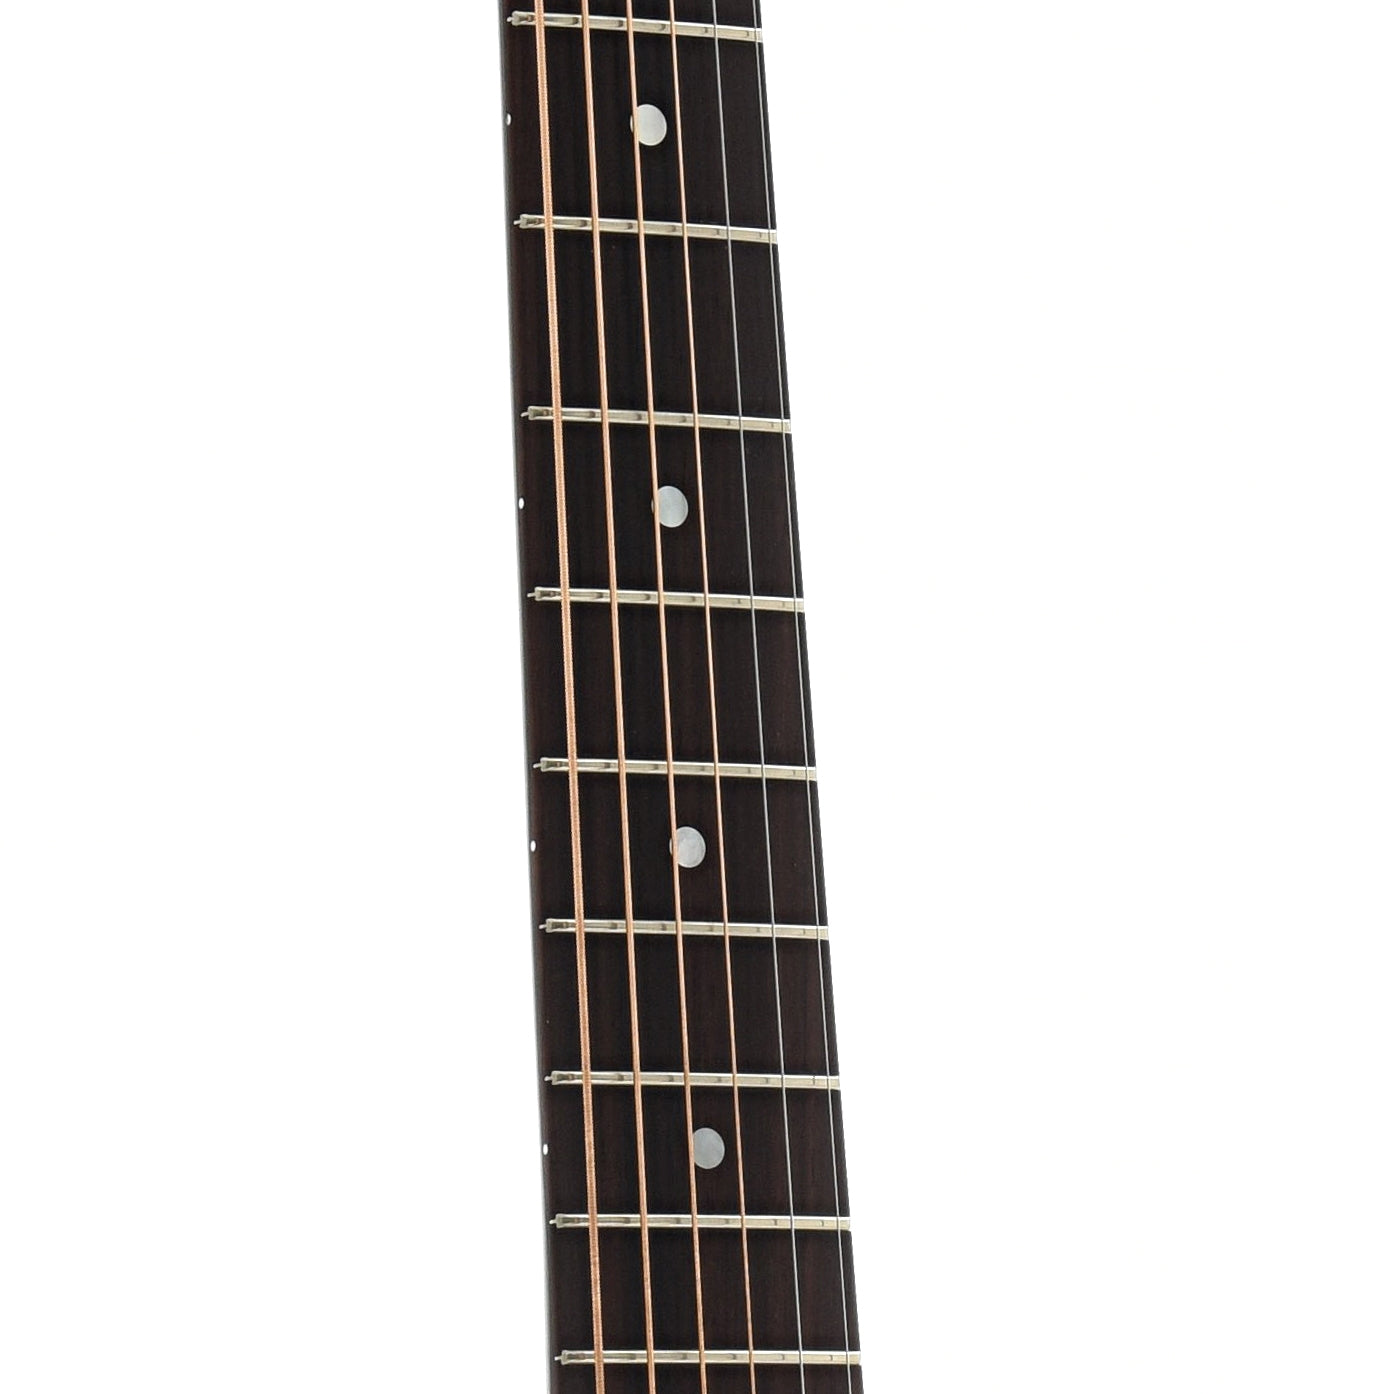 Image 5 of Pre-War Guitars Co. Slope Shoulder Mahogany, Shadetop, Level 1 Aging - SKU# PWMJ : Product Type Flat-top Guitars : Elderly Instruments